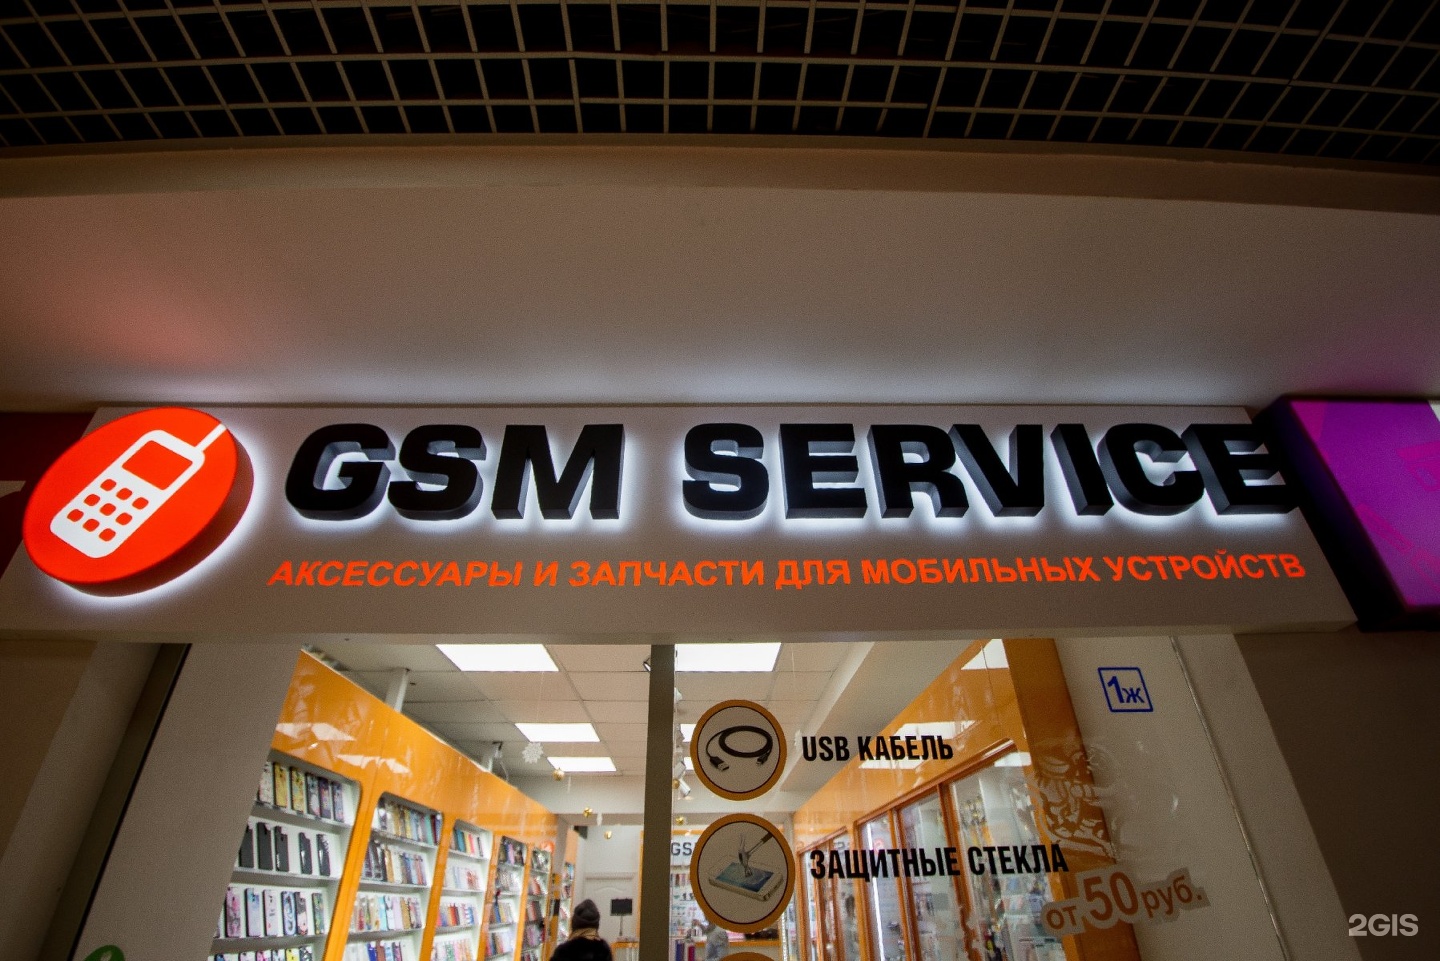 Ип телефон омск. GSM service Омск. GSM сервис Омск Орджоникидзе. Магазин GSM Владивосток. GSM service Омск реклама.